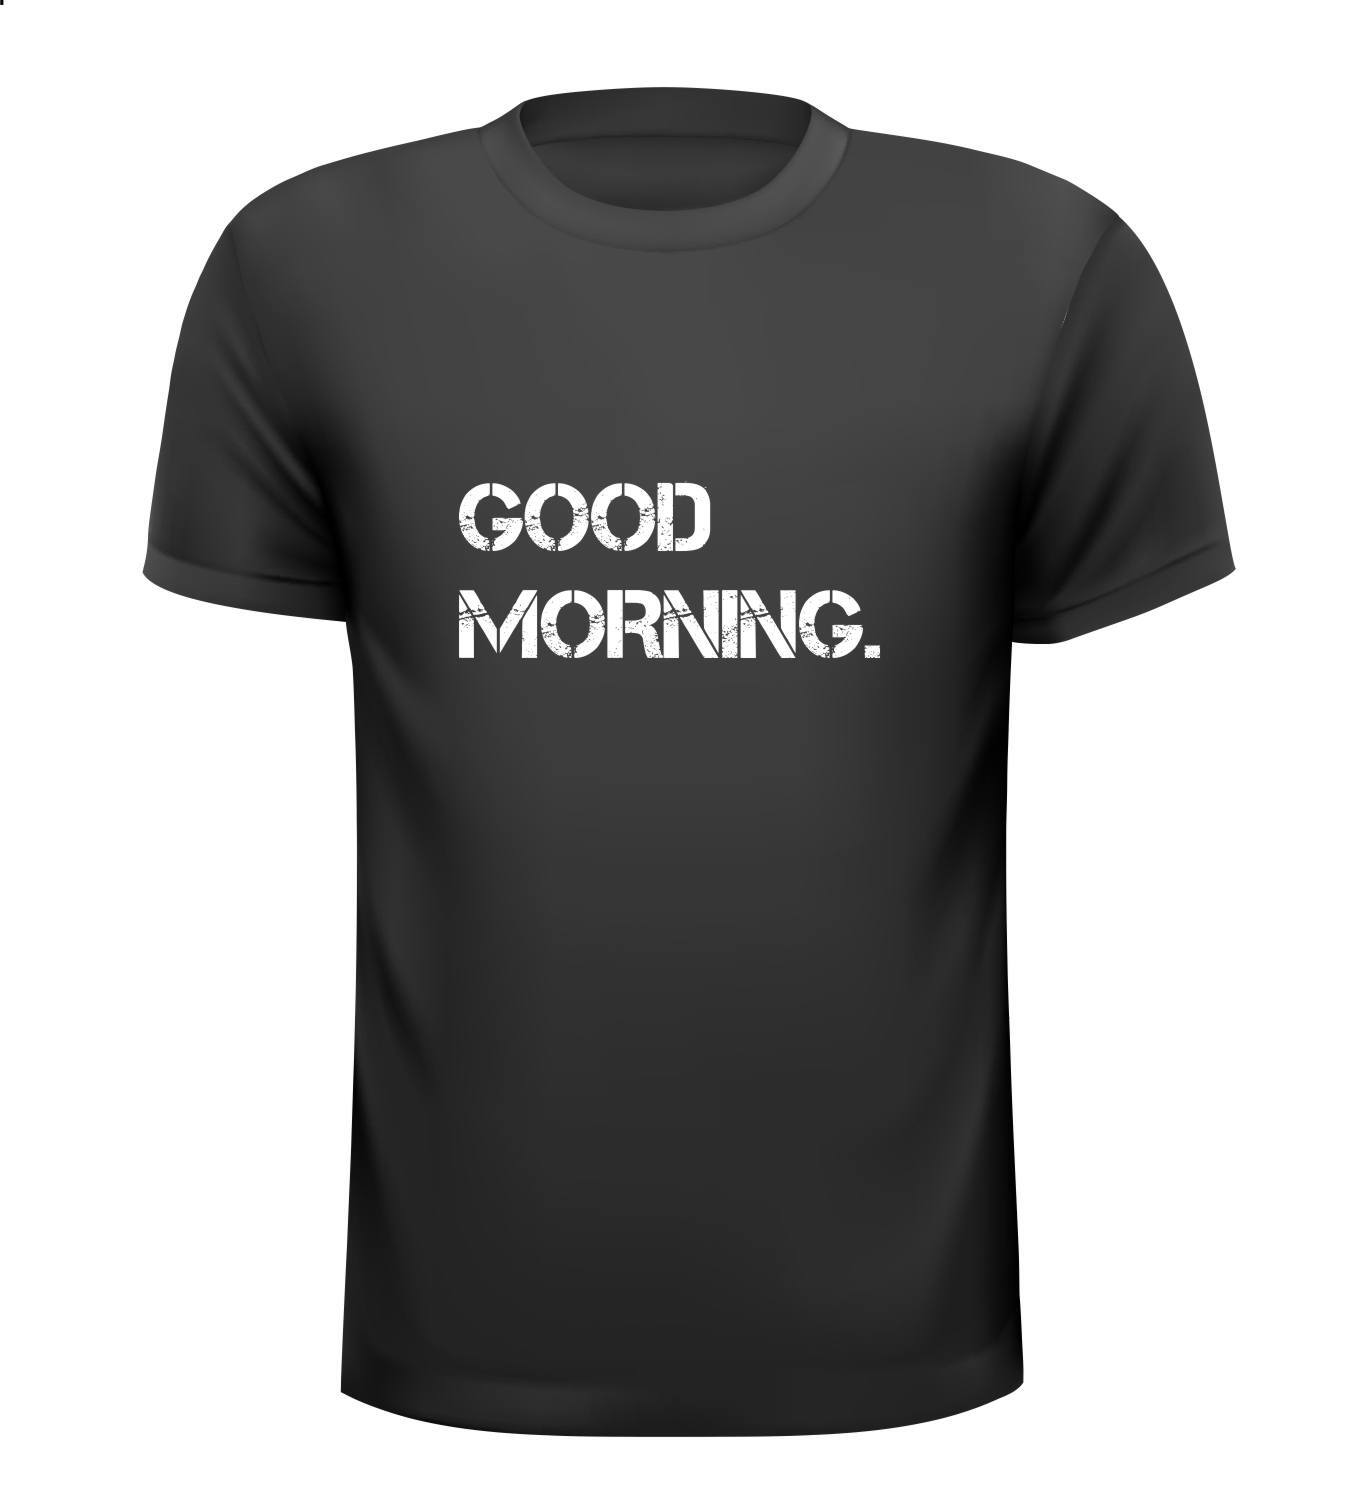 Good morning T-shirt